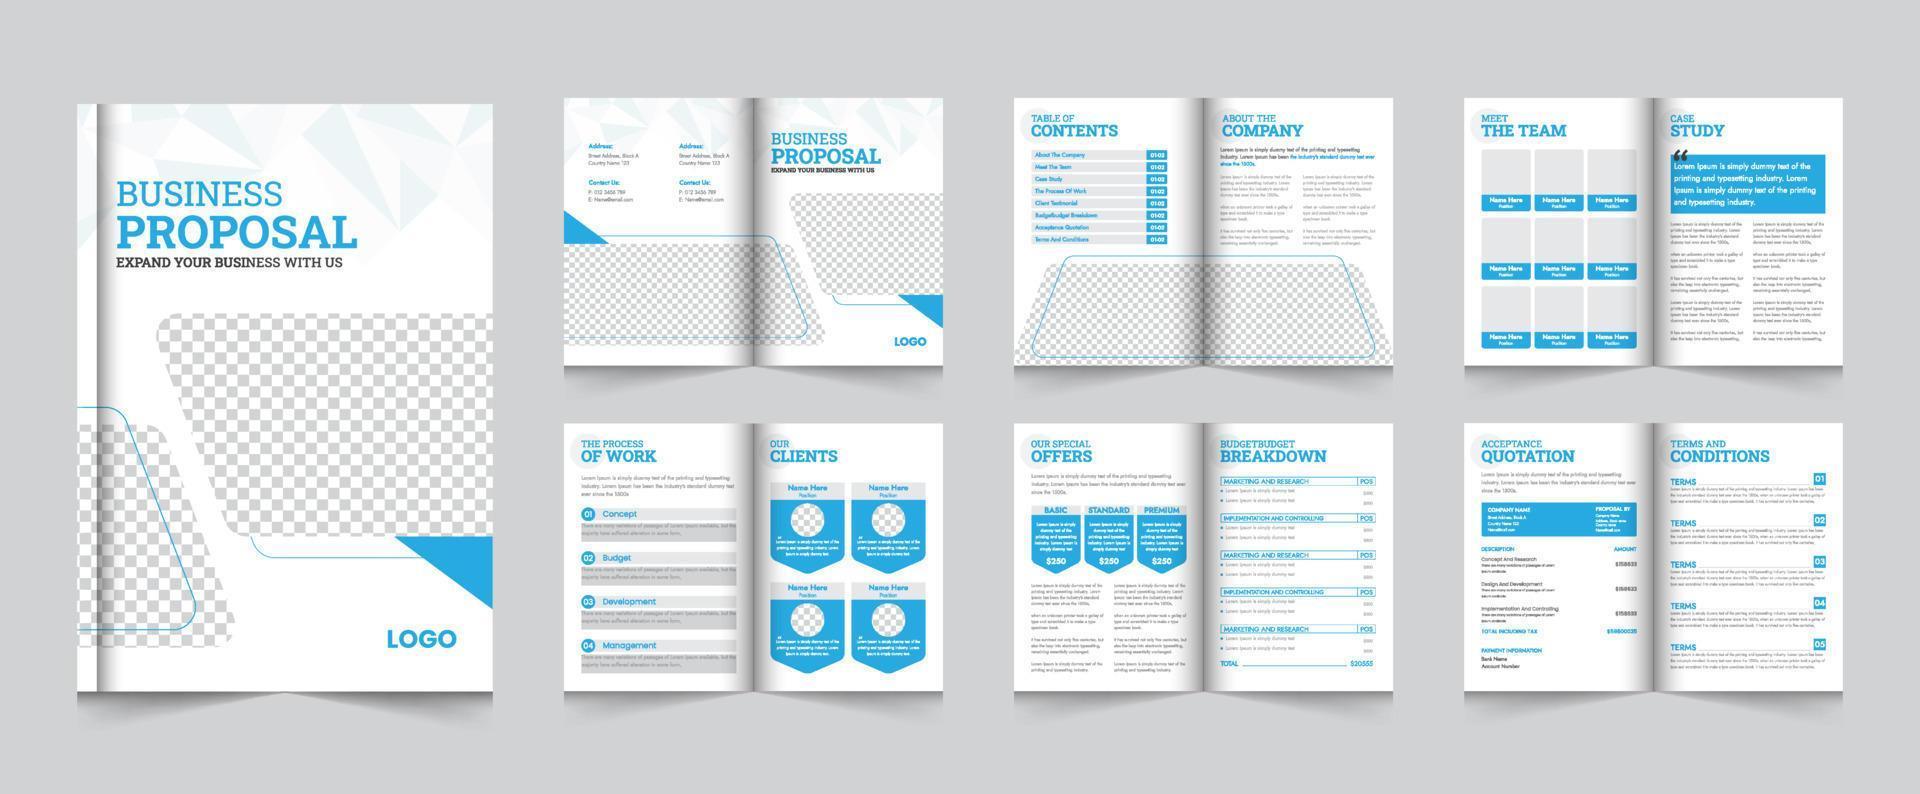 A4 Creative Business Proposal Layout Brochure Template Design vector